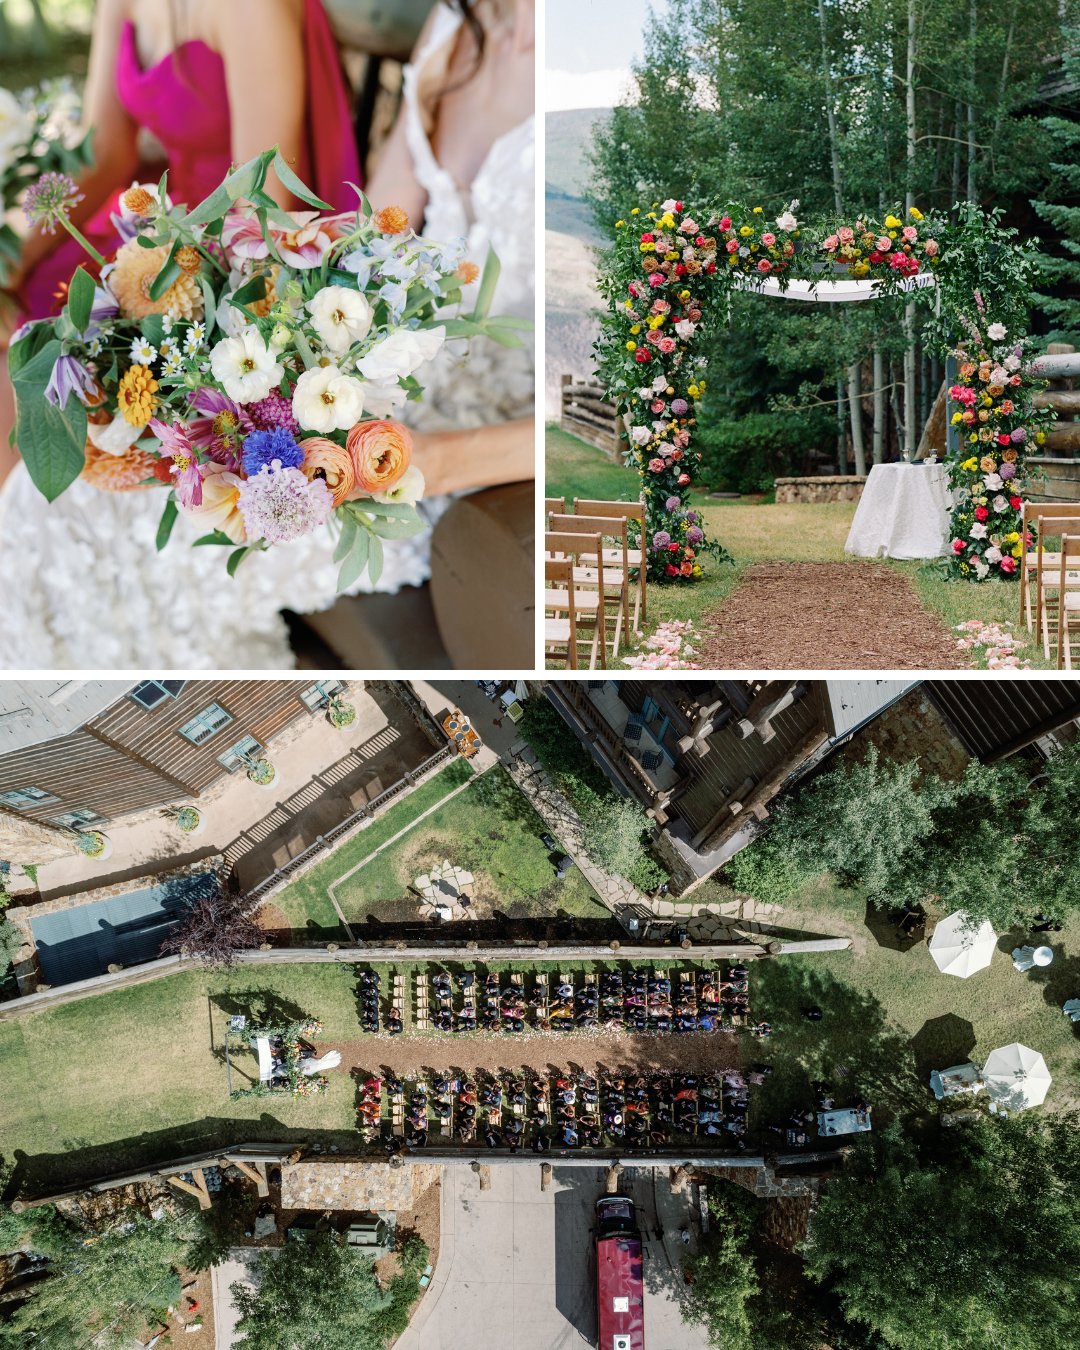 bridal bouquet, floral arch, ceremony aerial view